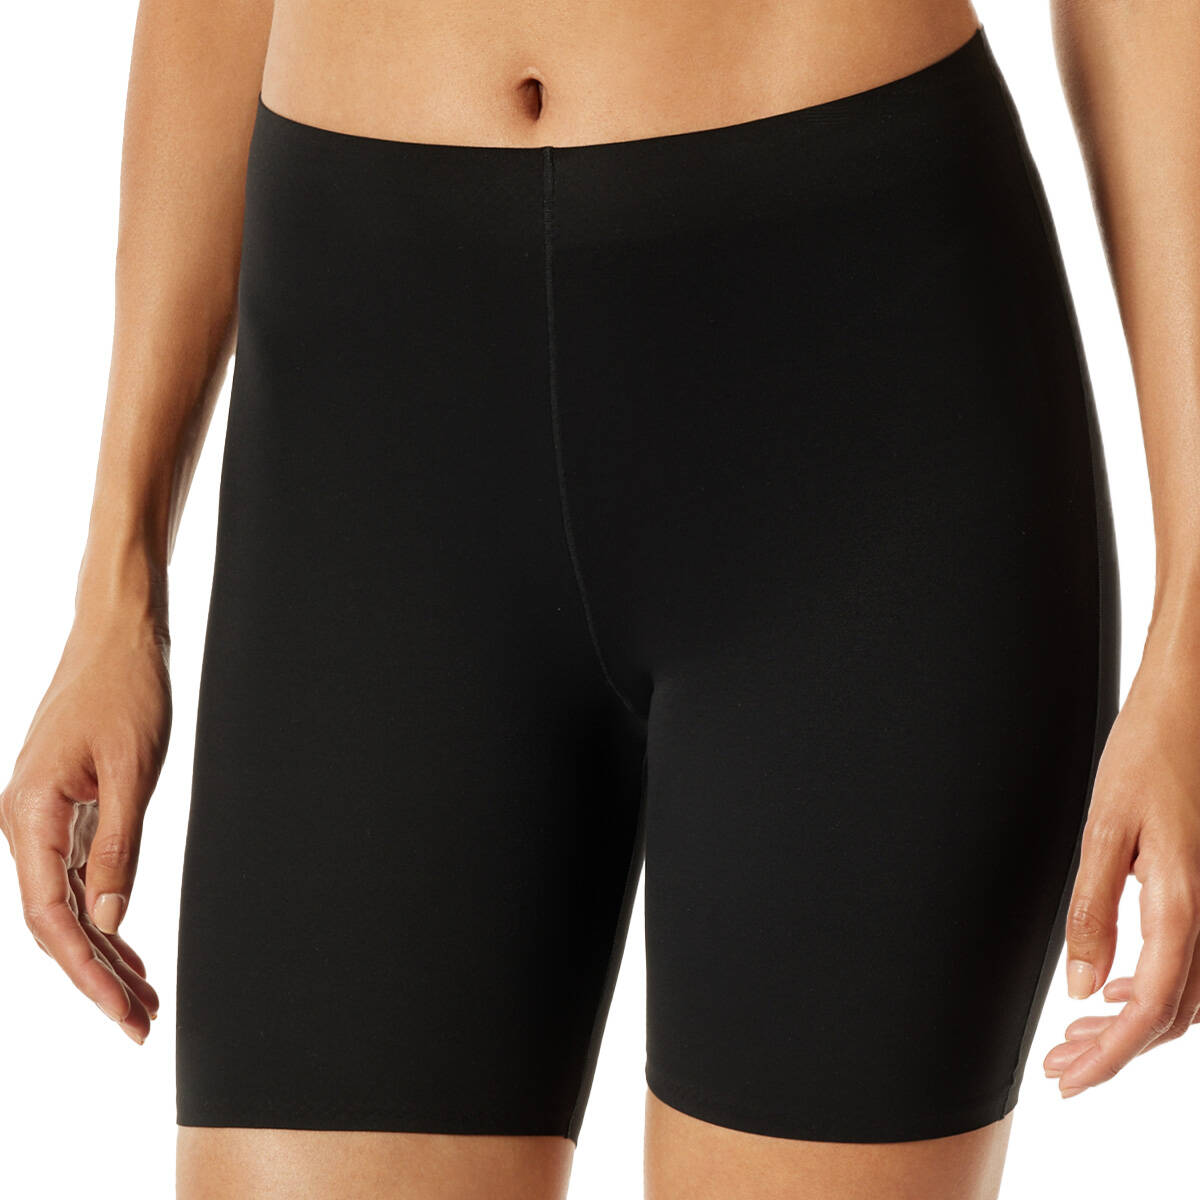 Schiesser - Invisible Soft - Damen - Biker Shorts - Panty - Slip - Un,  44,95 €